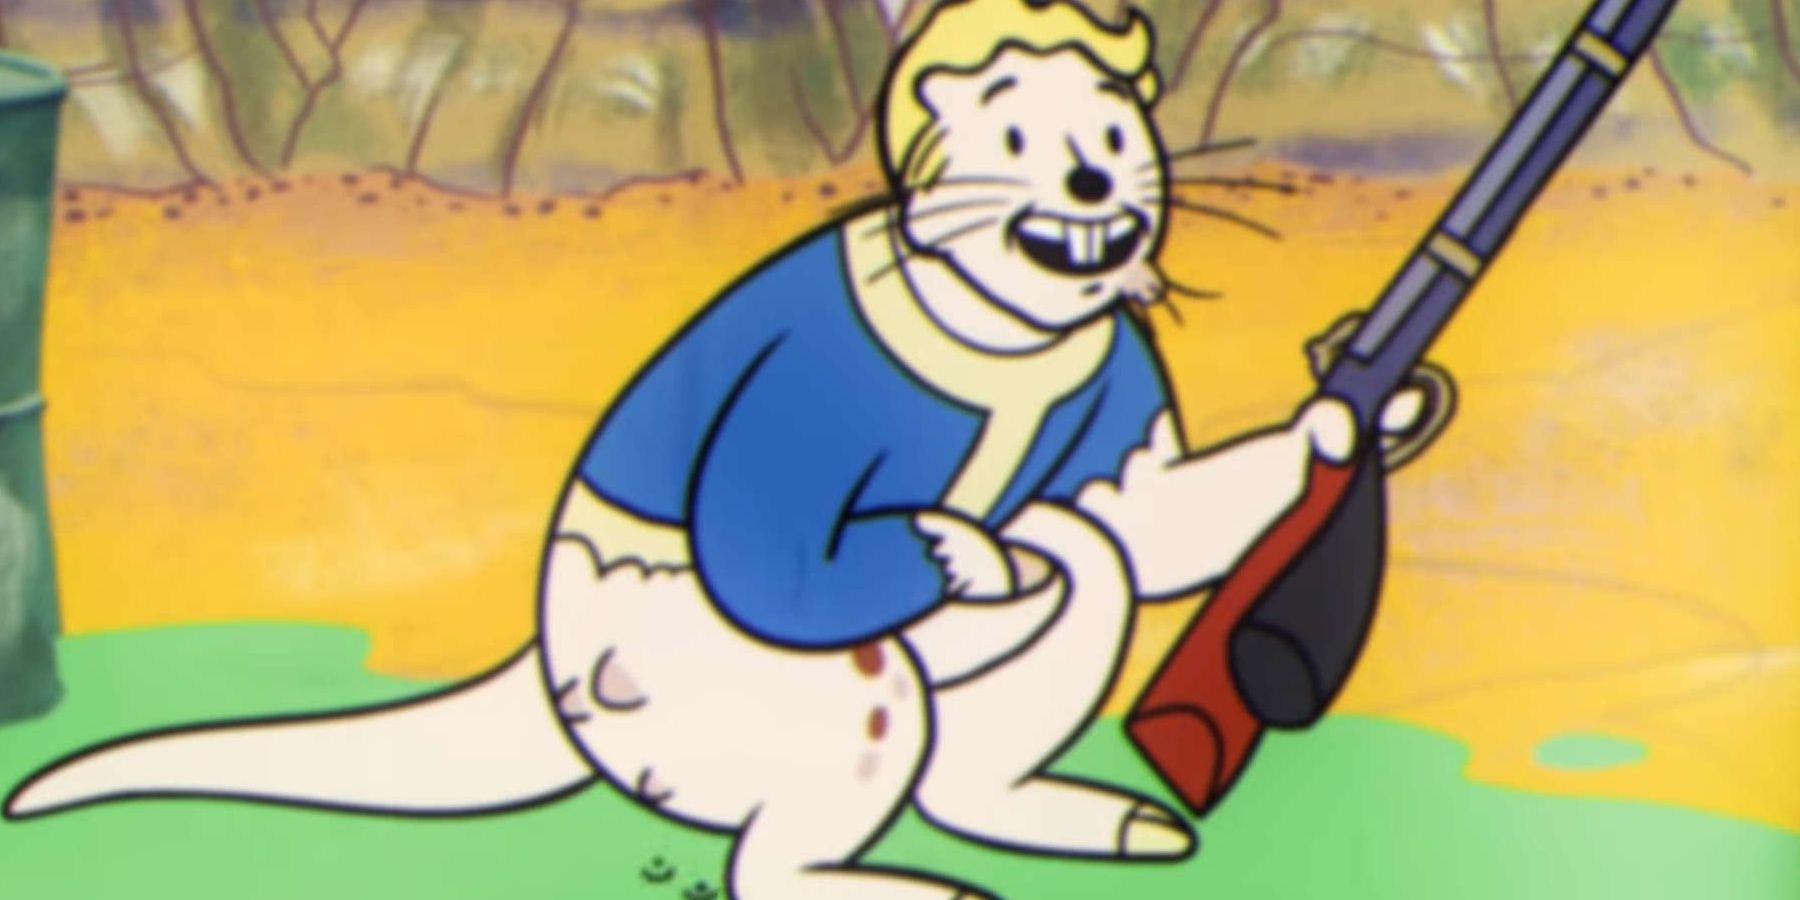 Fallout 76 Marsupial. A Fallout mascot mutated into a molerat.